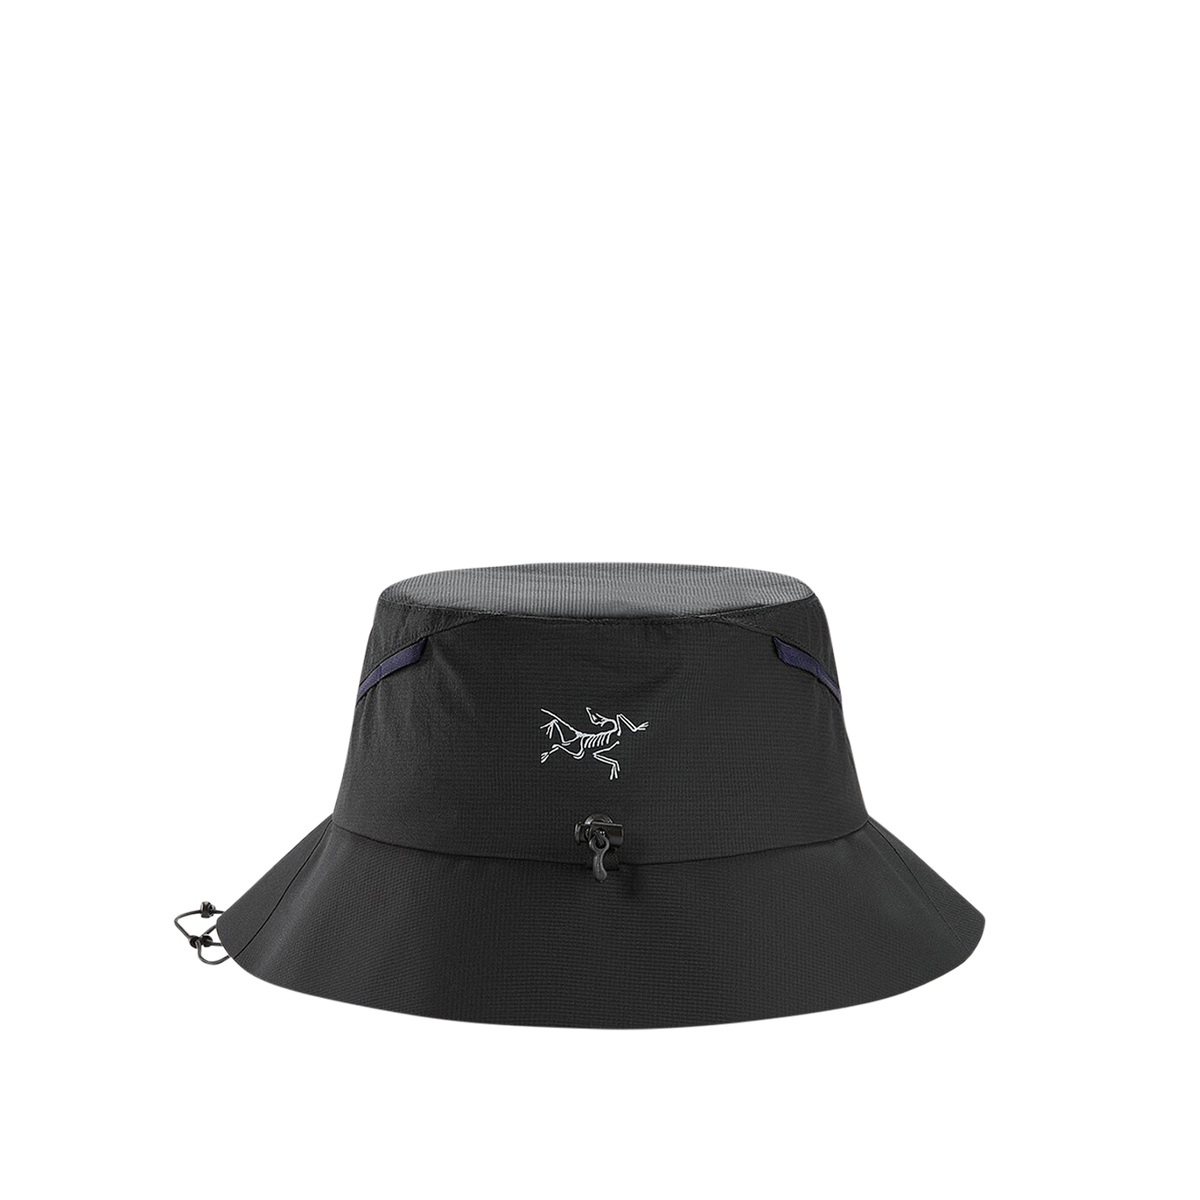 System_A Letro Bucket Hat - Black